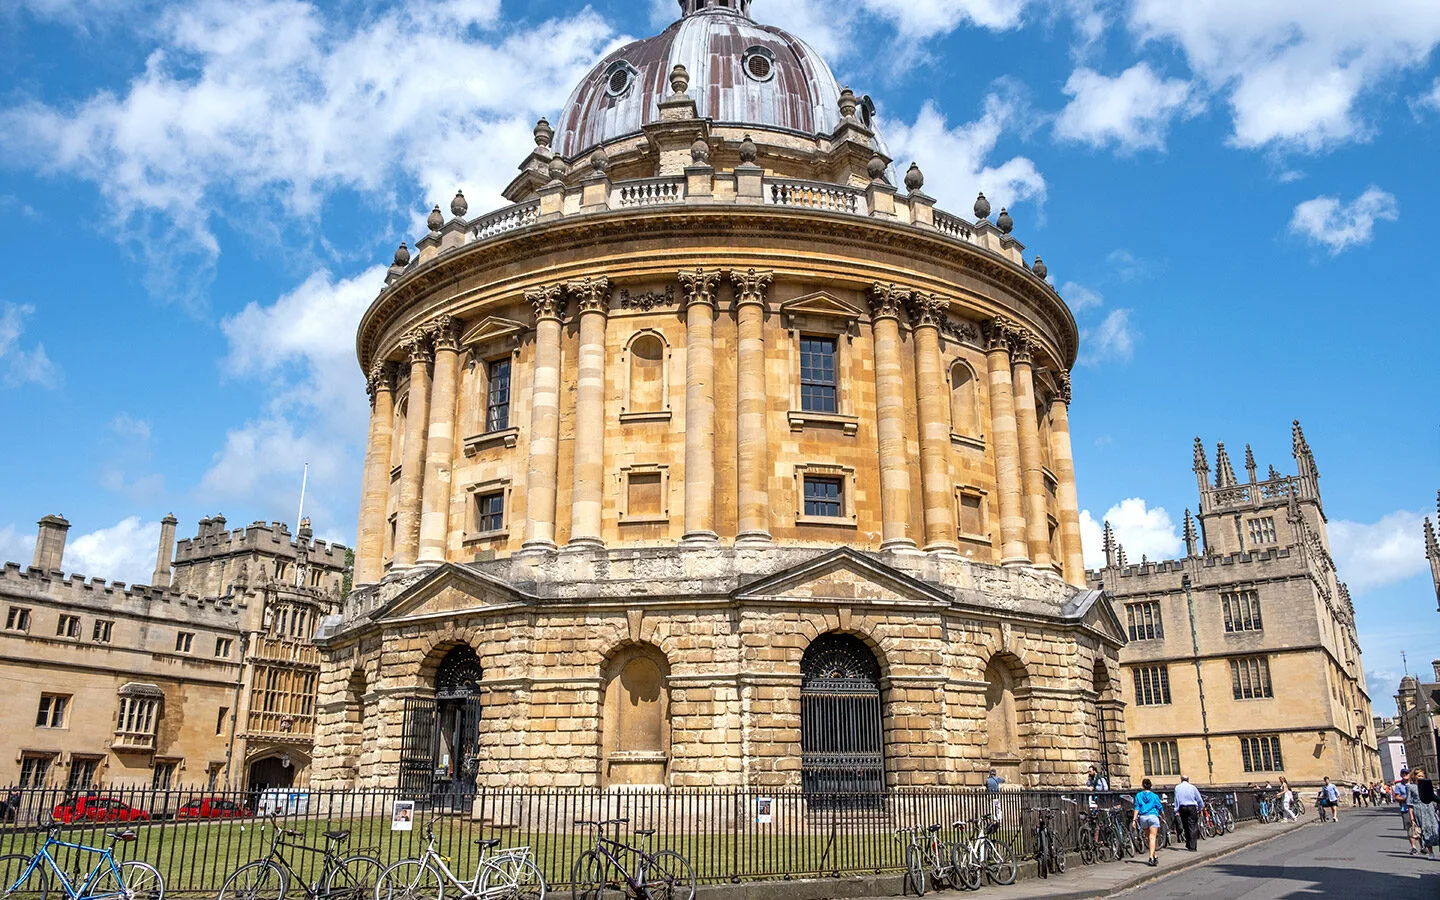 Oxford University's Radcliffe Camera